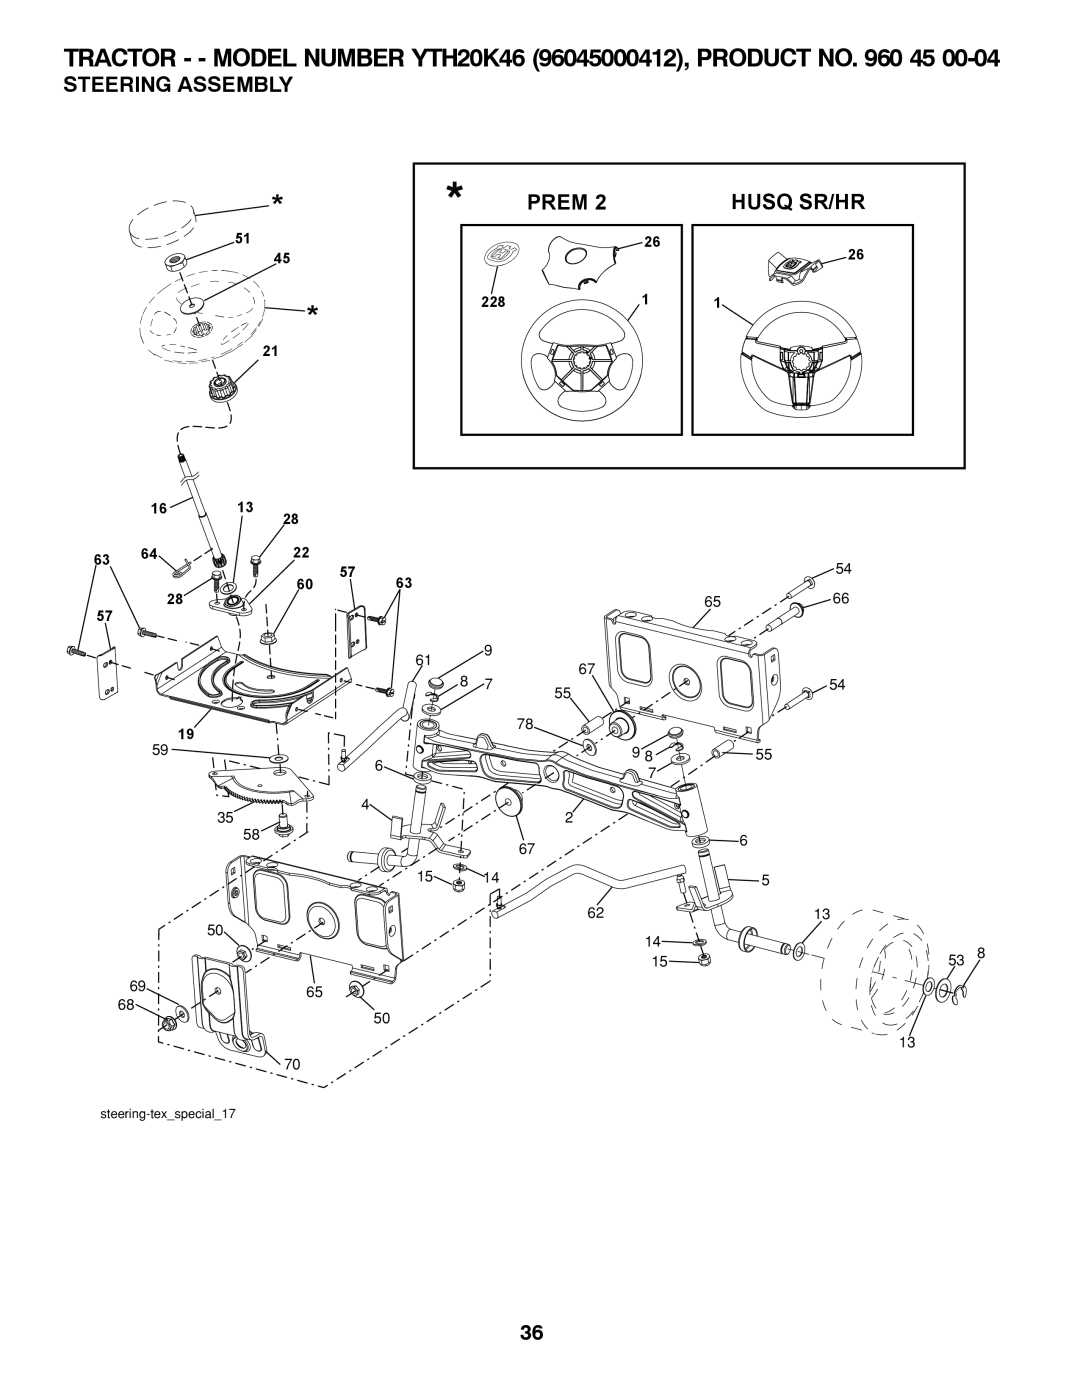 Husqvarna Steering Assembly, TRACTOR - - MODEL NUMBER YTH20K46 96045000412, PRODUCT NO. 960 45, Prem, Husq Sr/Hr 